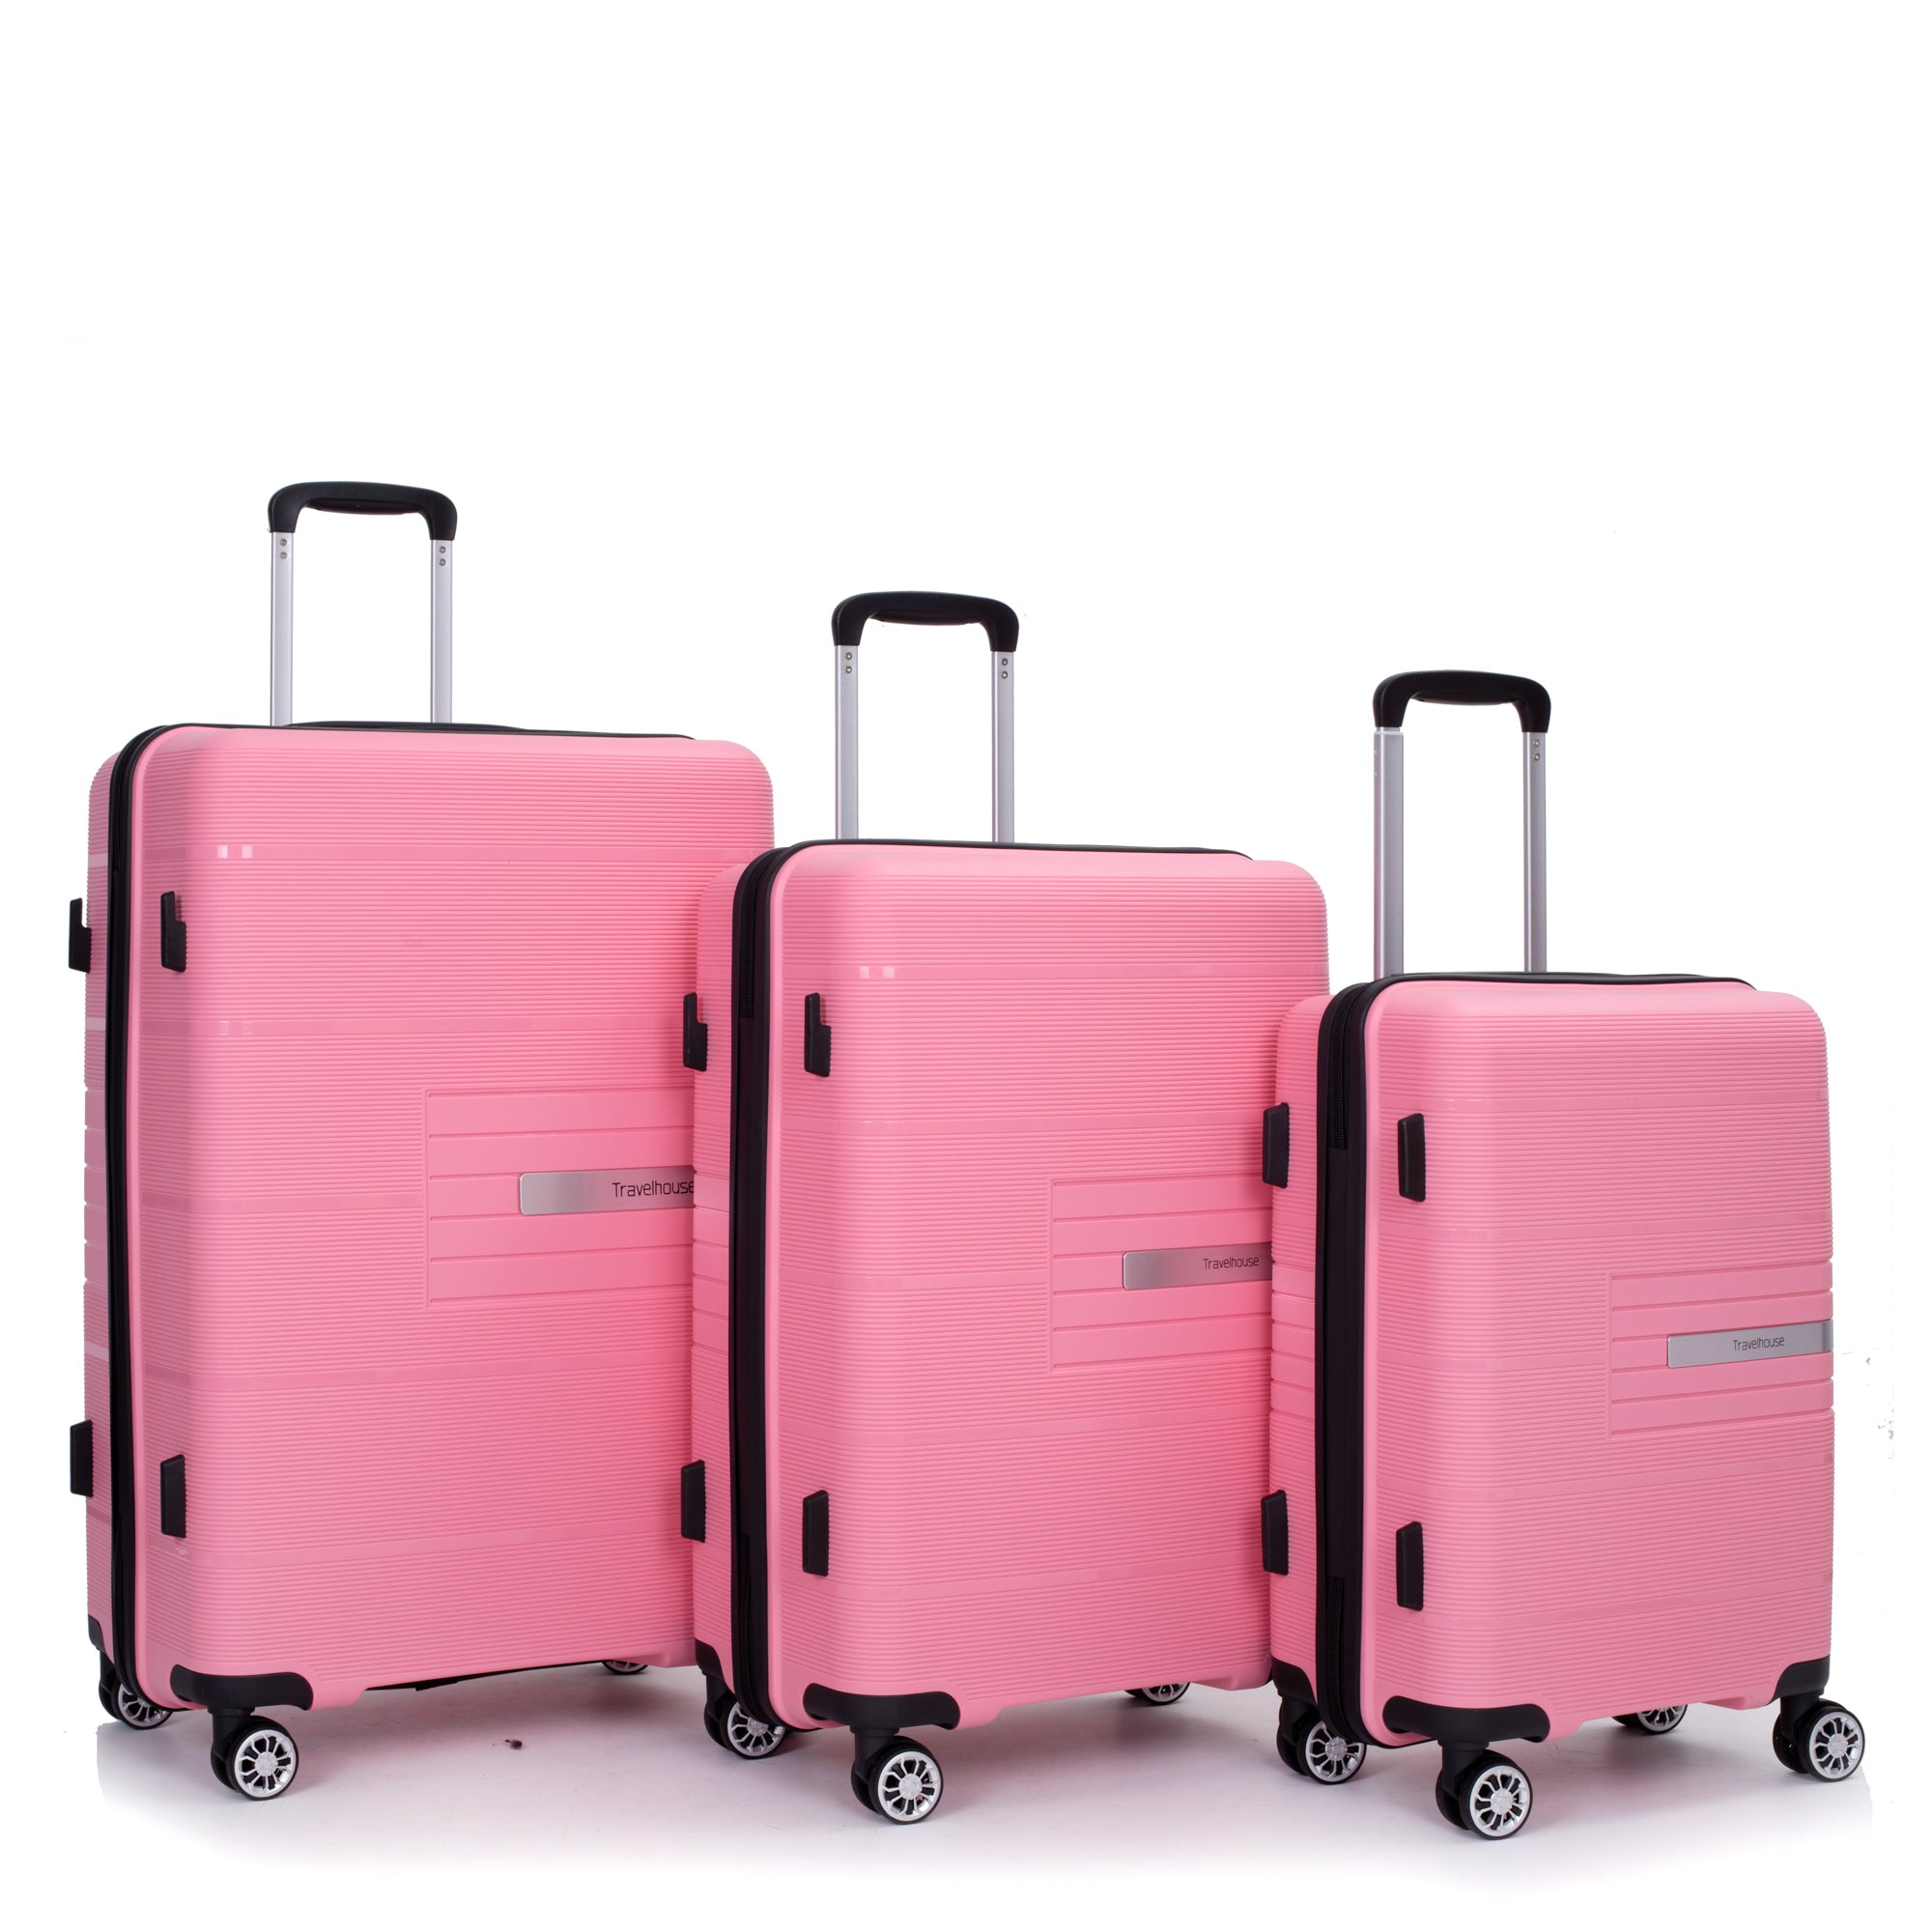 Hardshell Suitcase Double Spinner Wheels PP Luggage pink-polypropylene